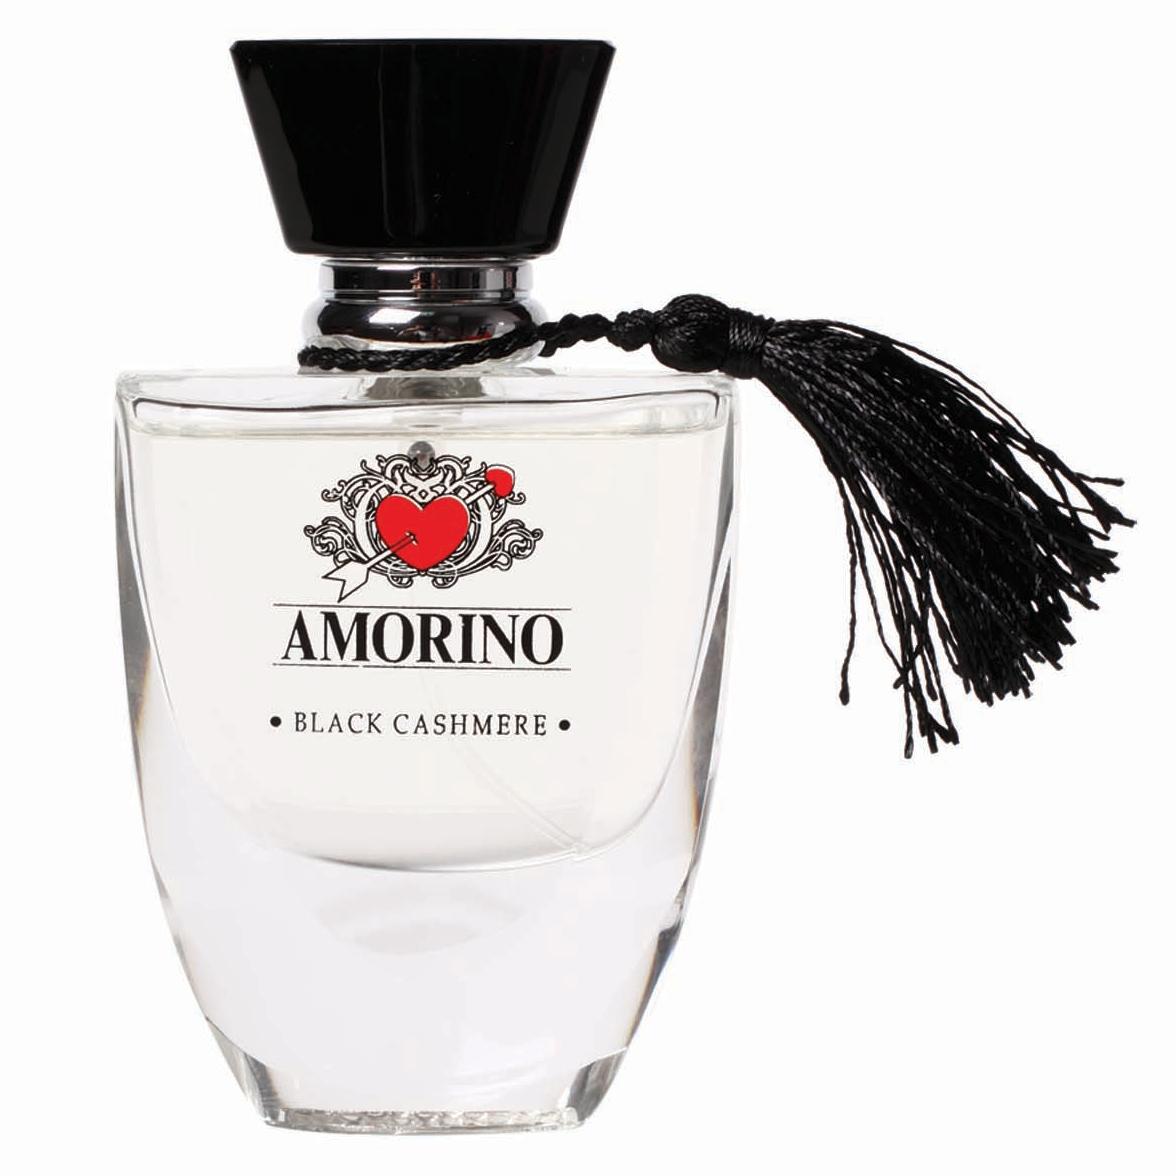 AMORINO PRIVE BLACK CASHMERE